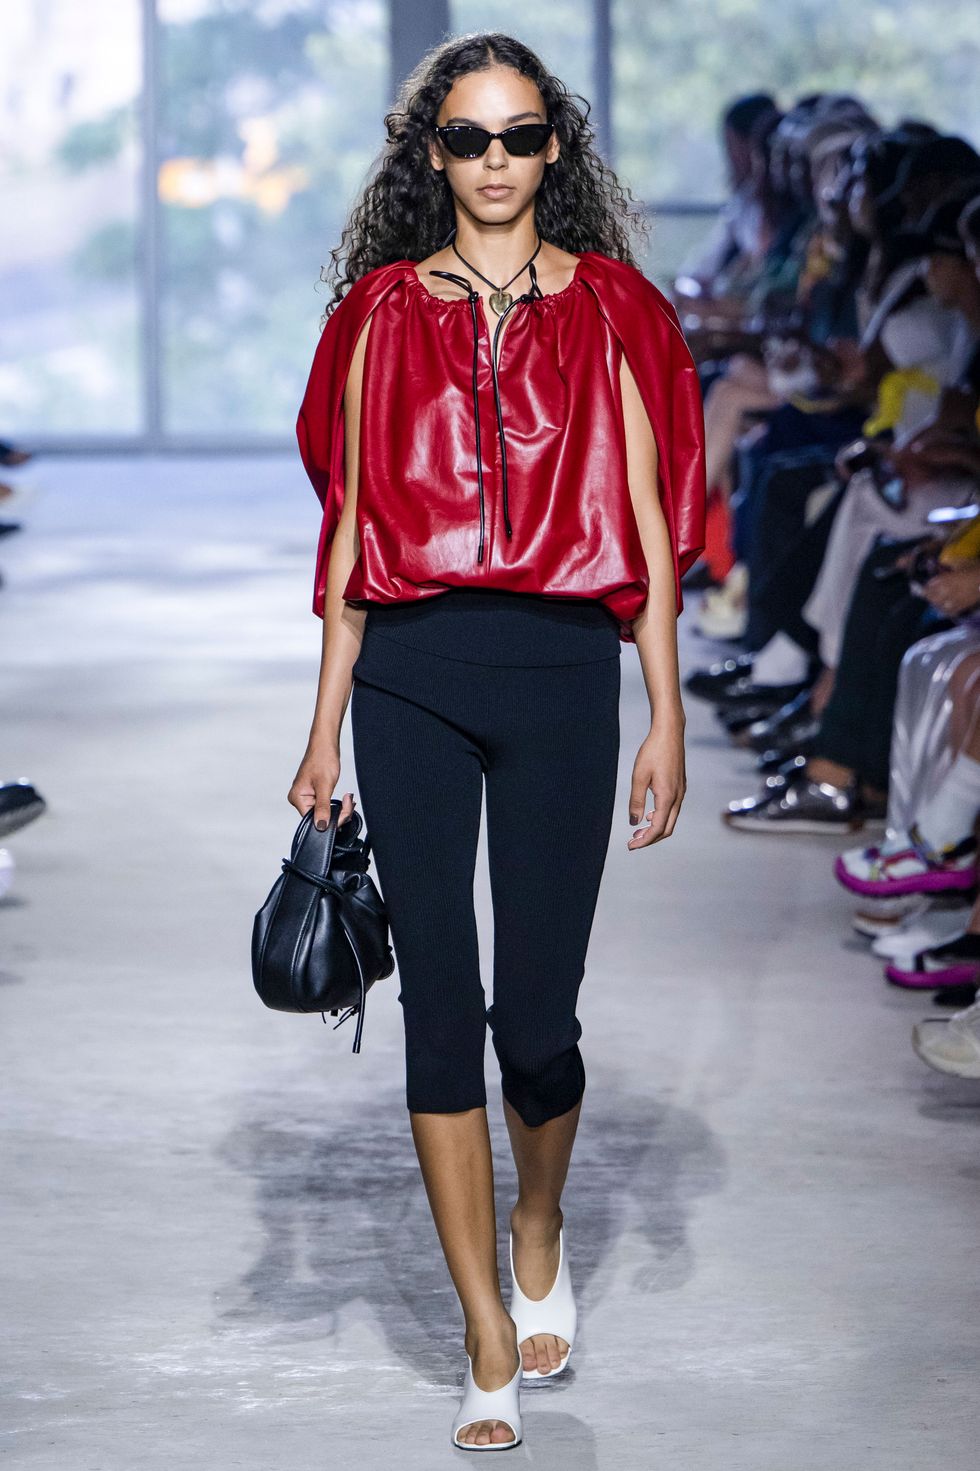 Capri Pants Trend 2023 - See 60 Capri Pants Models that are in Fashion